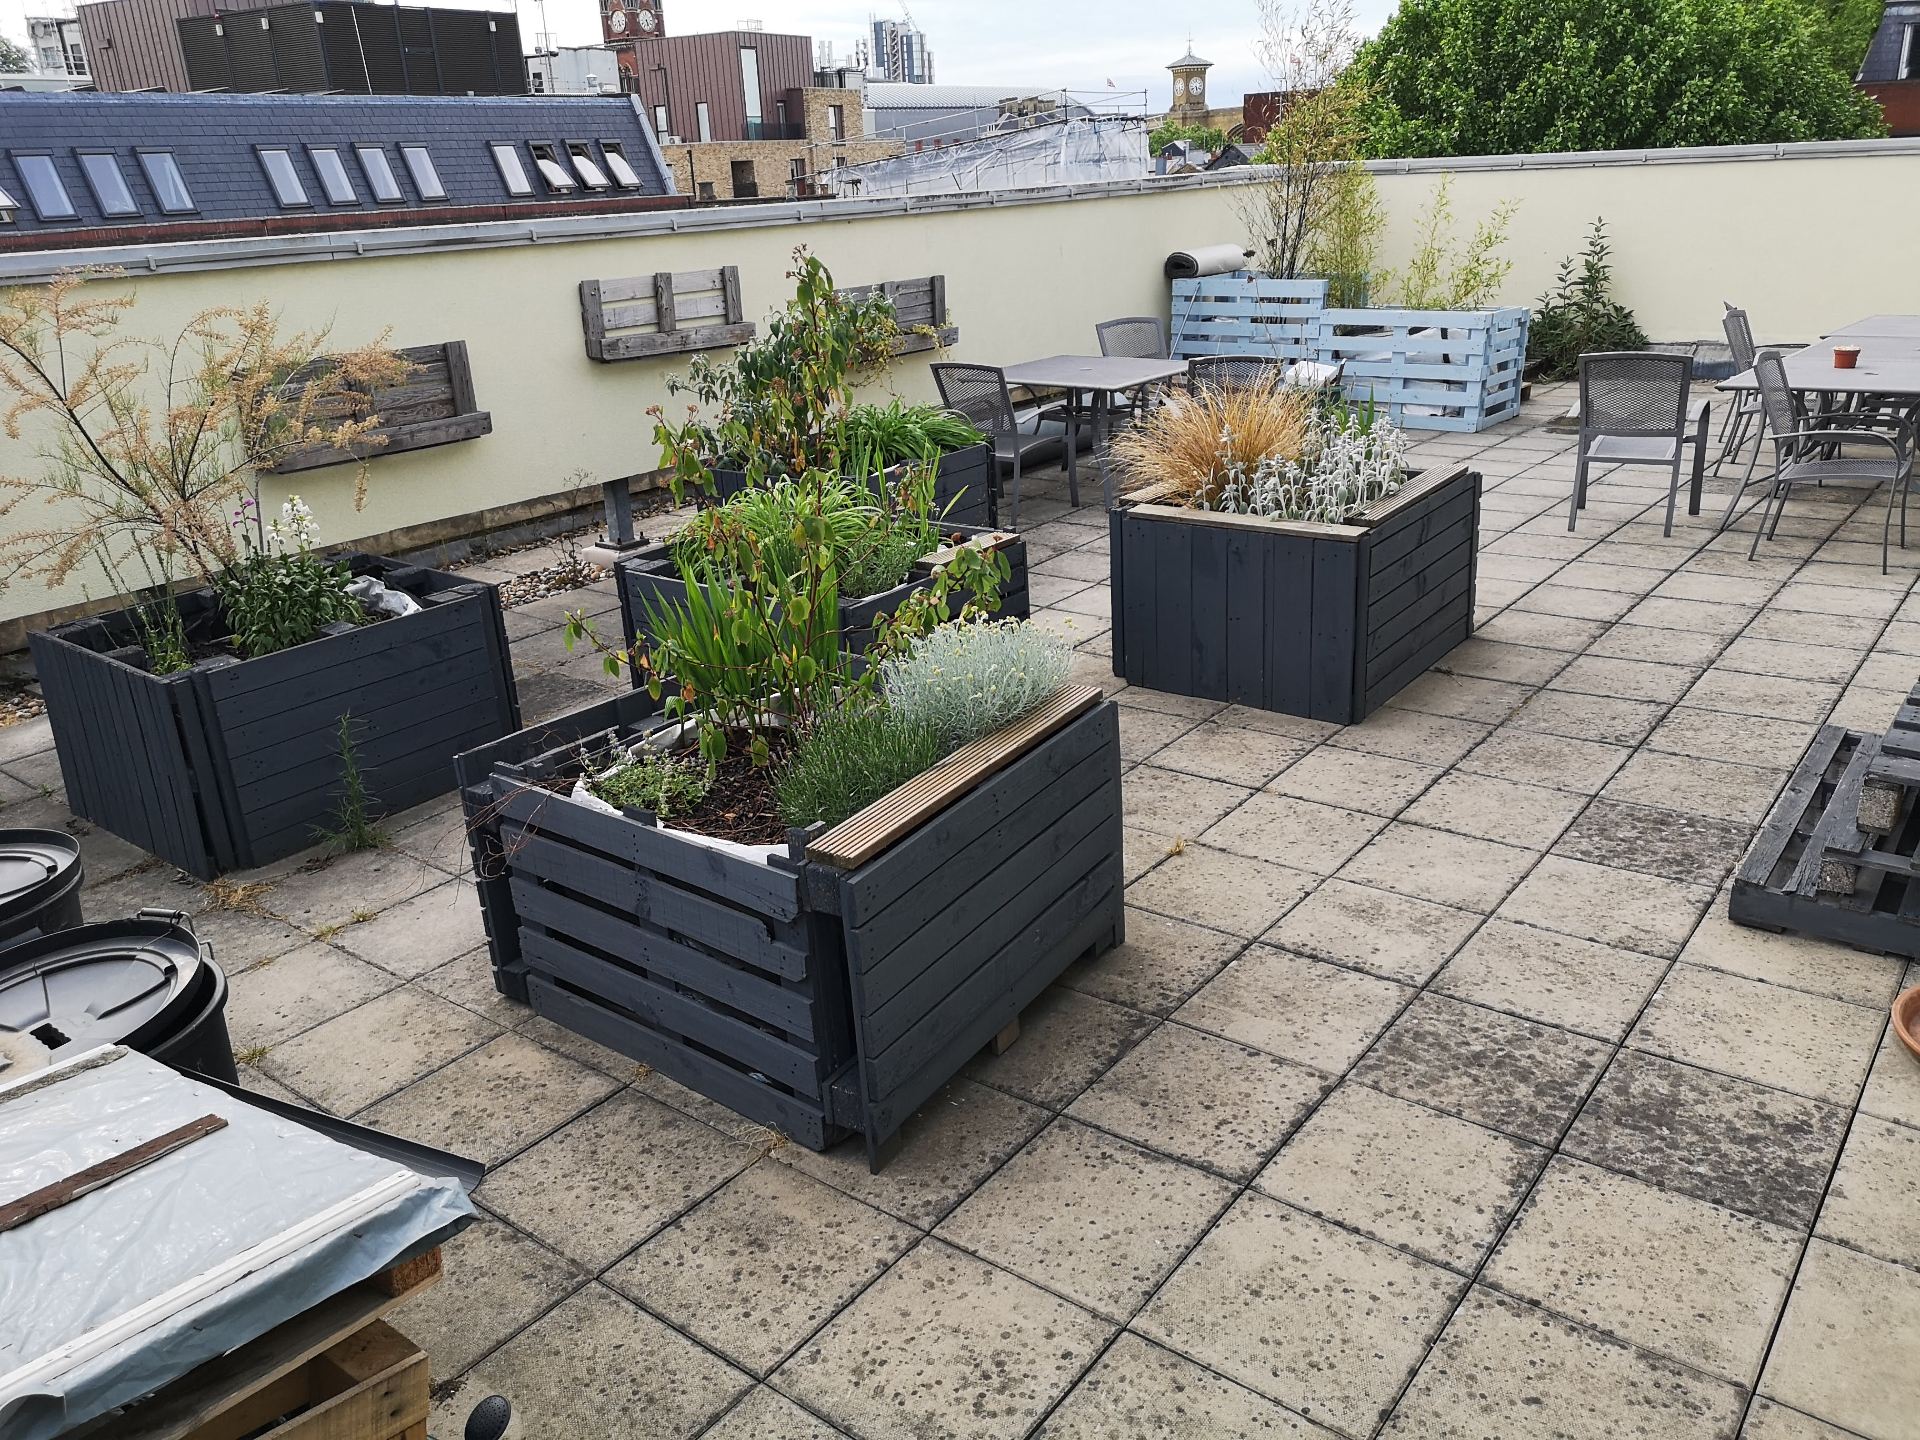 UCL ear institute roof garden